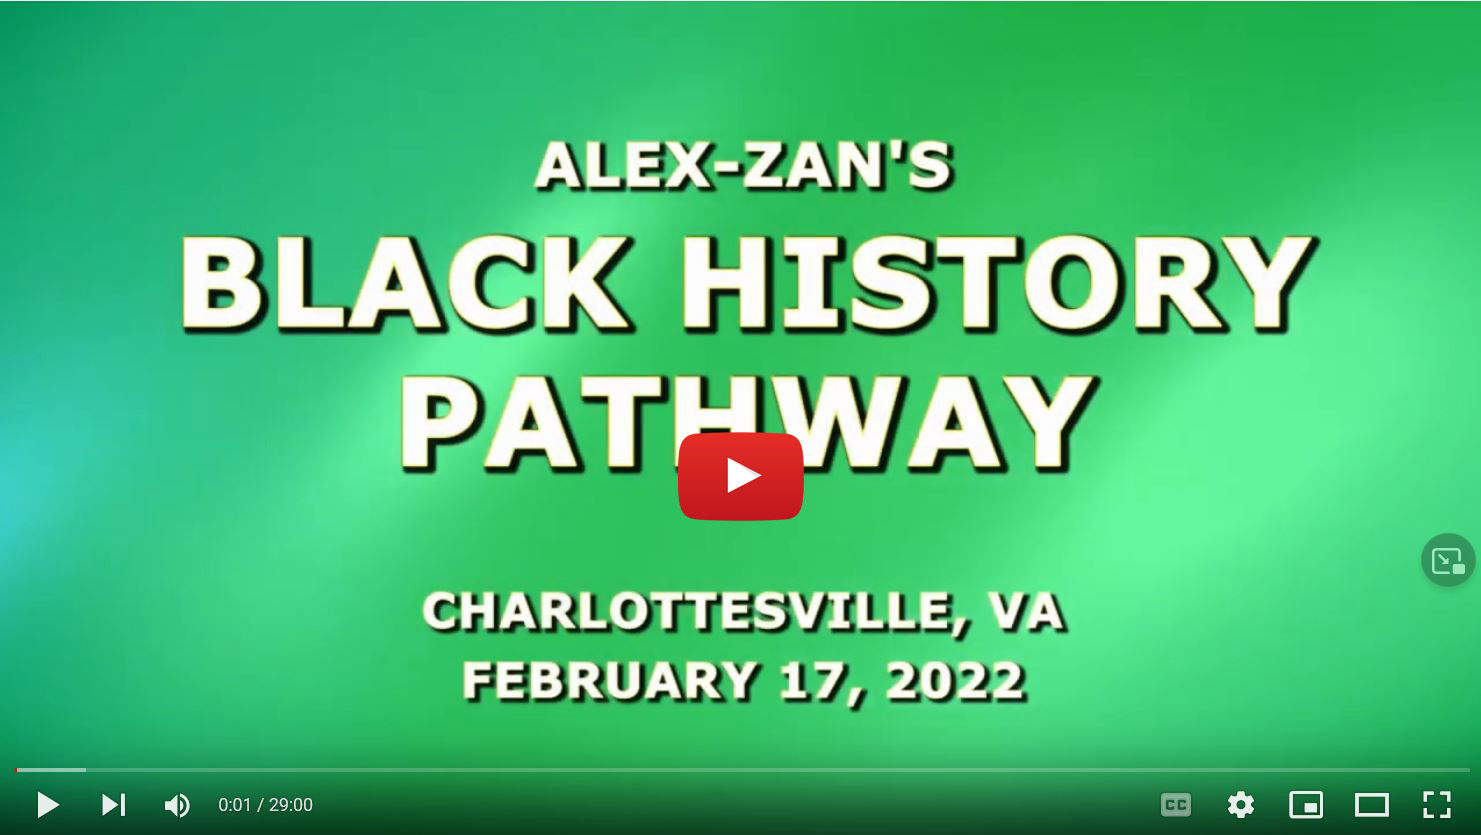 Alex-Zan Black History Pathway video